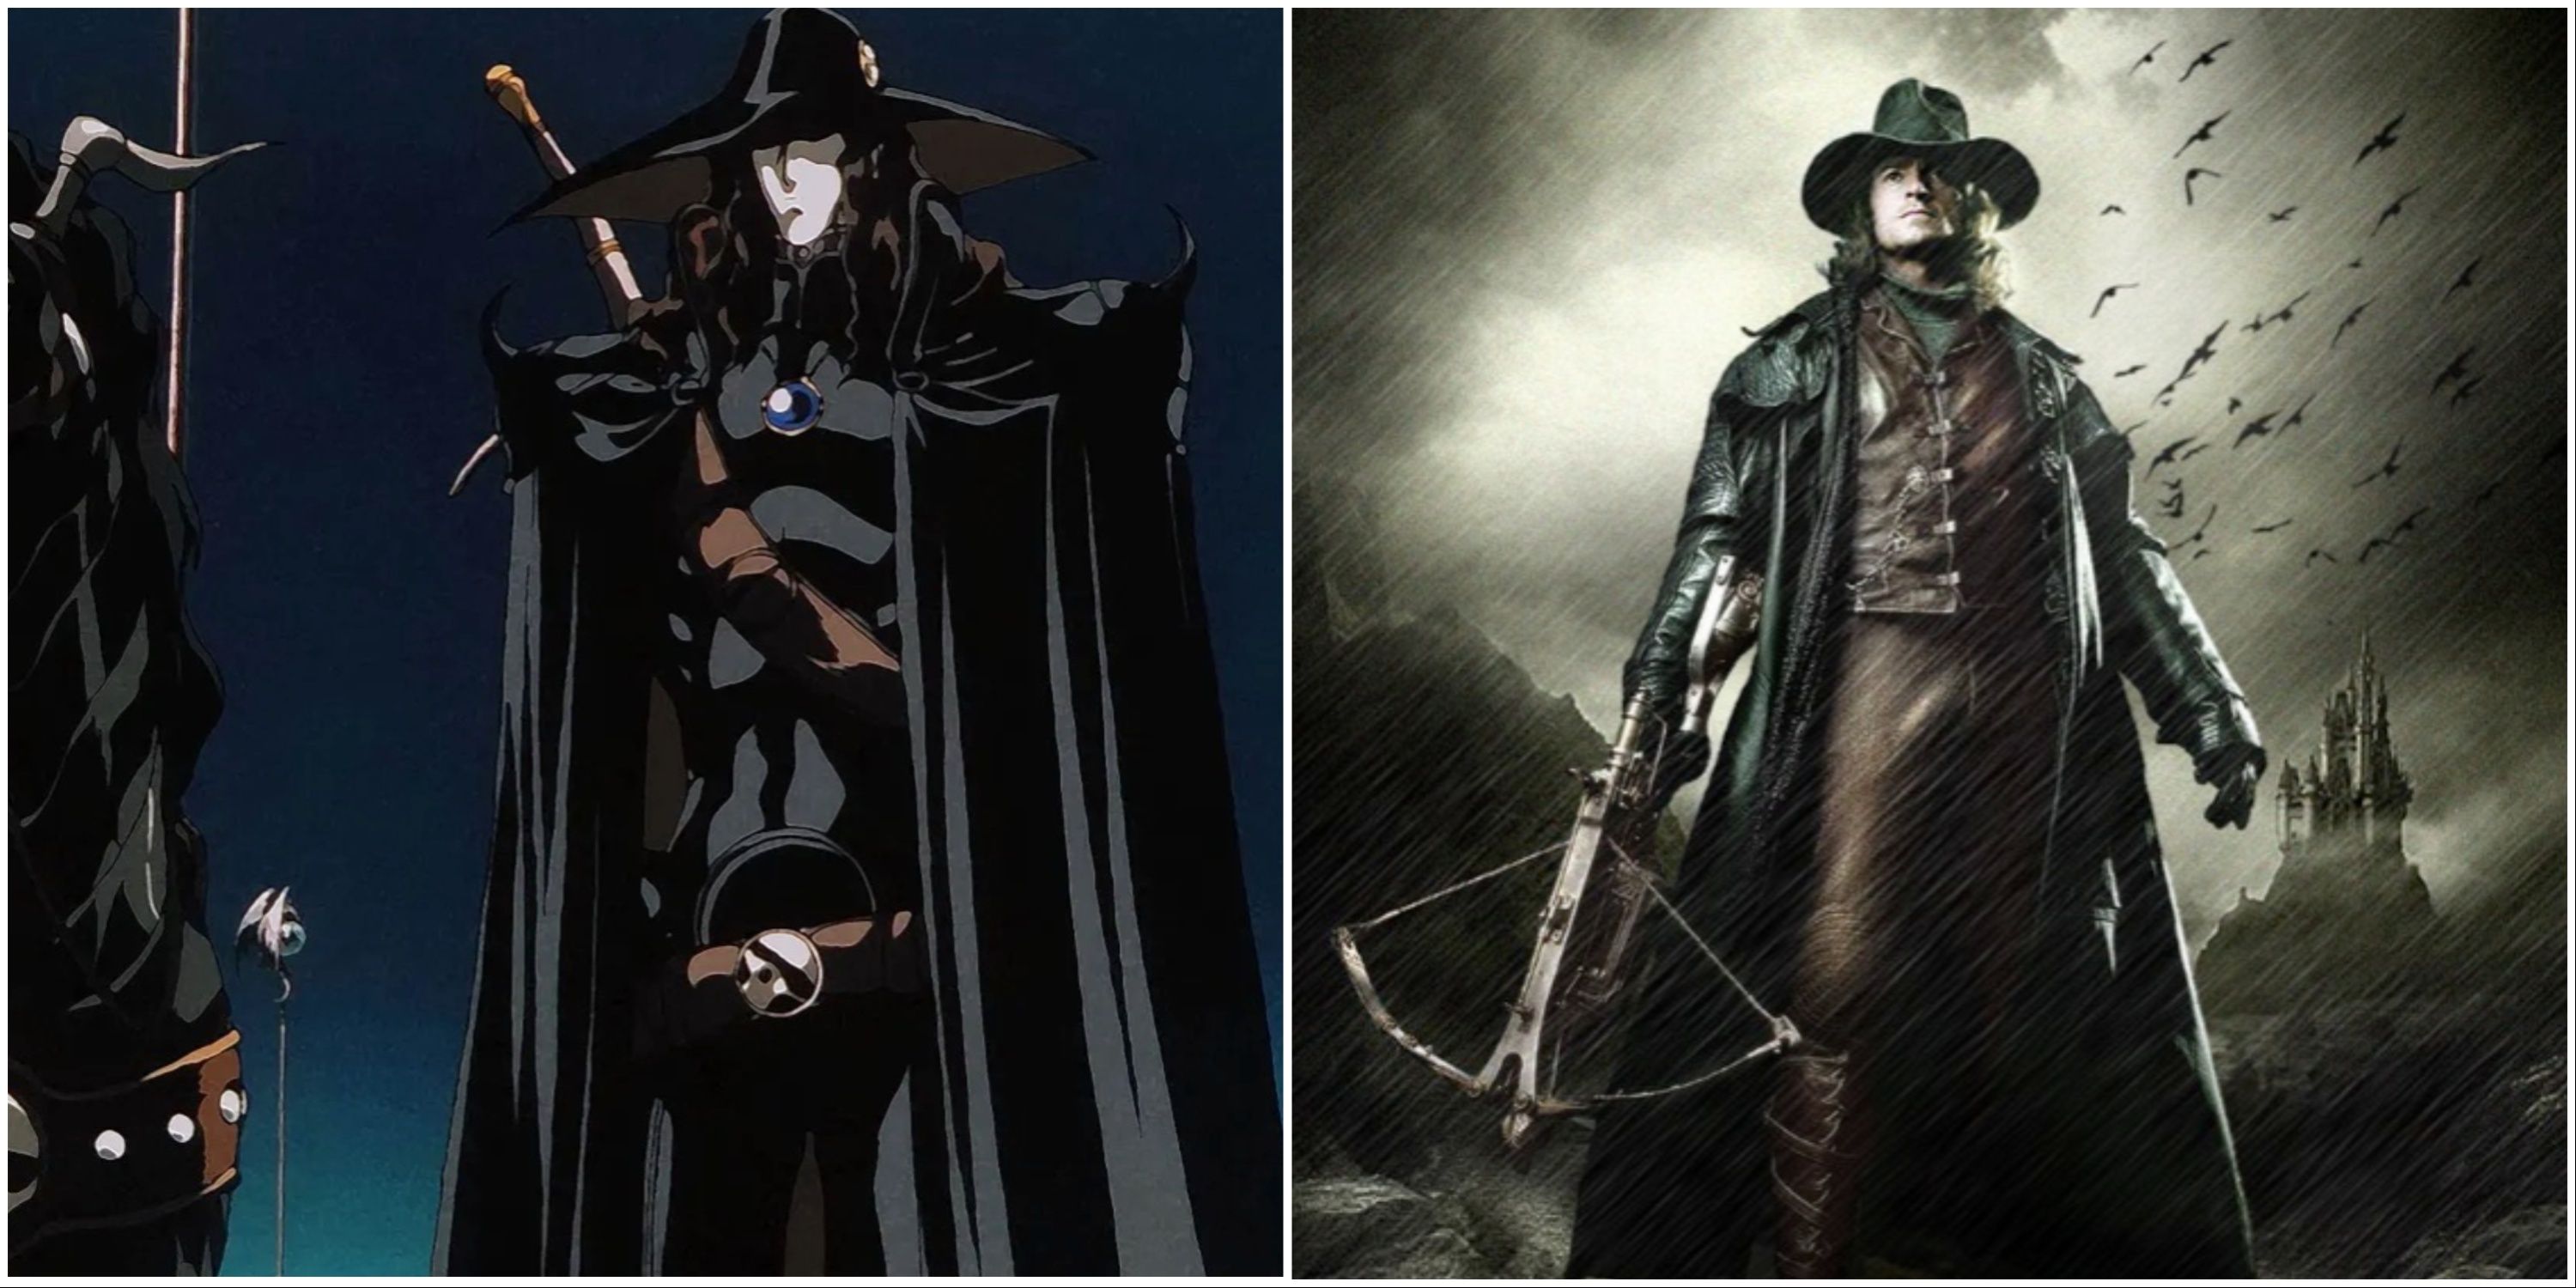 A split image showing Vampire Hunter D and Abraham Van Helsing